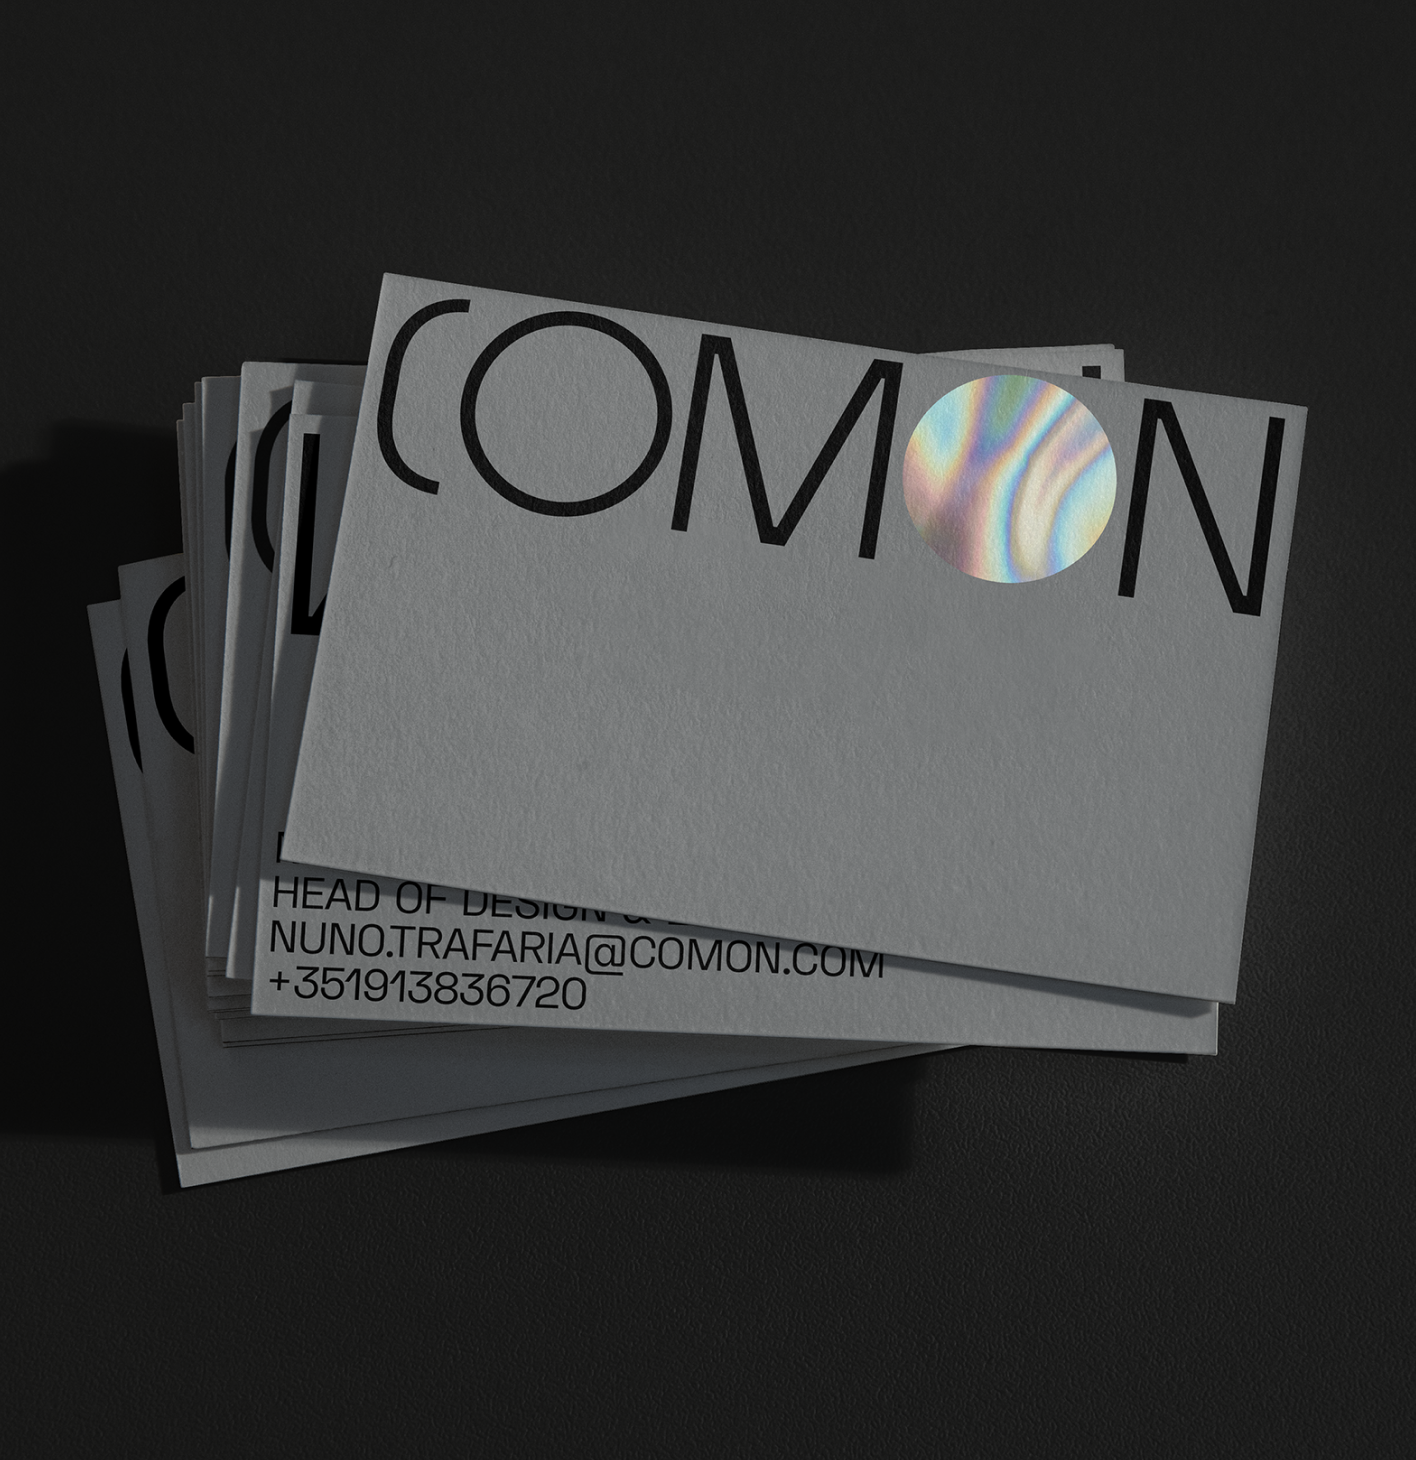 comon-cards-new